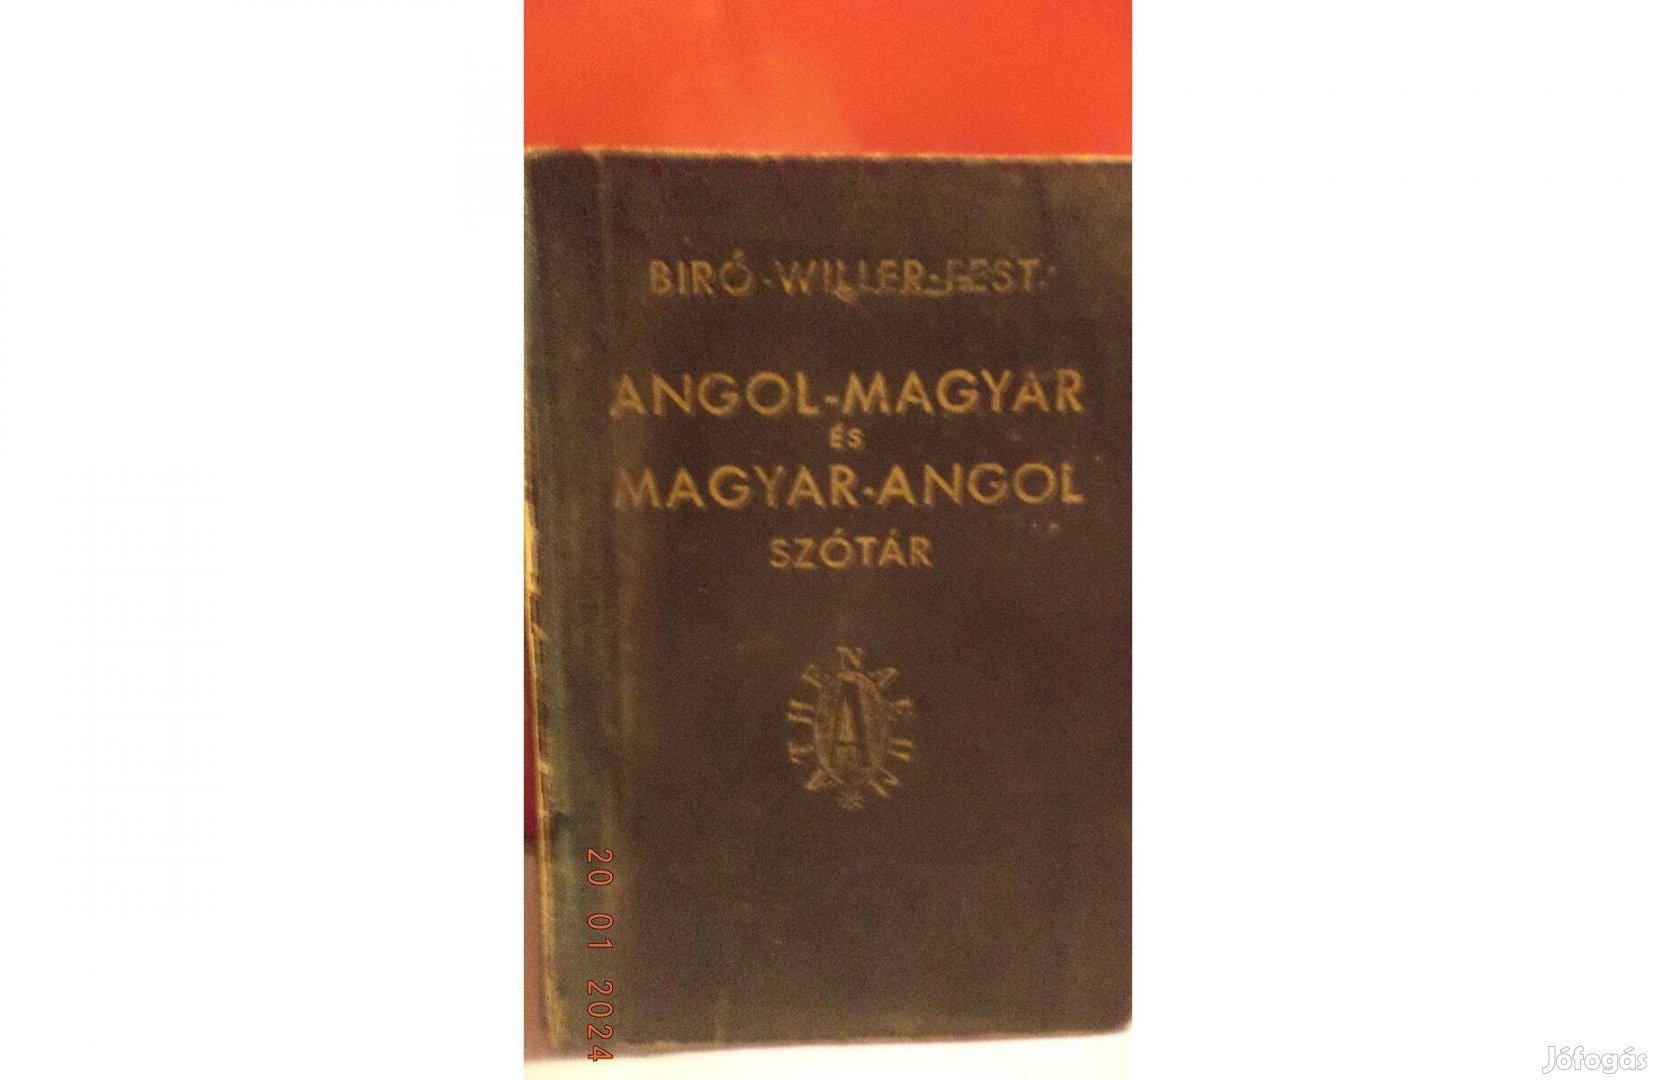 Biró - Willer - Fest: Angol - Magyar - Angol szótár